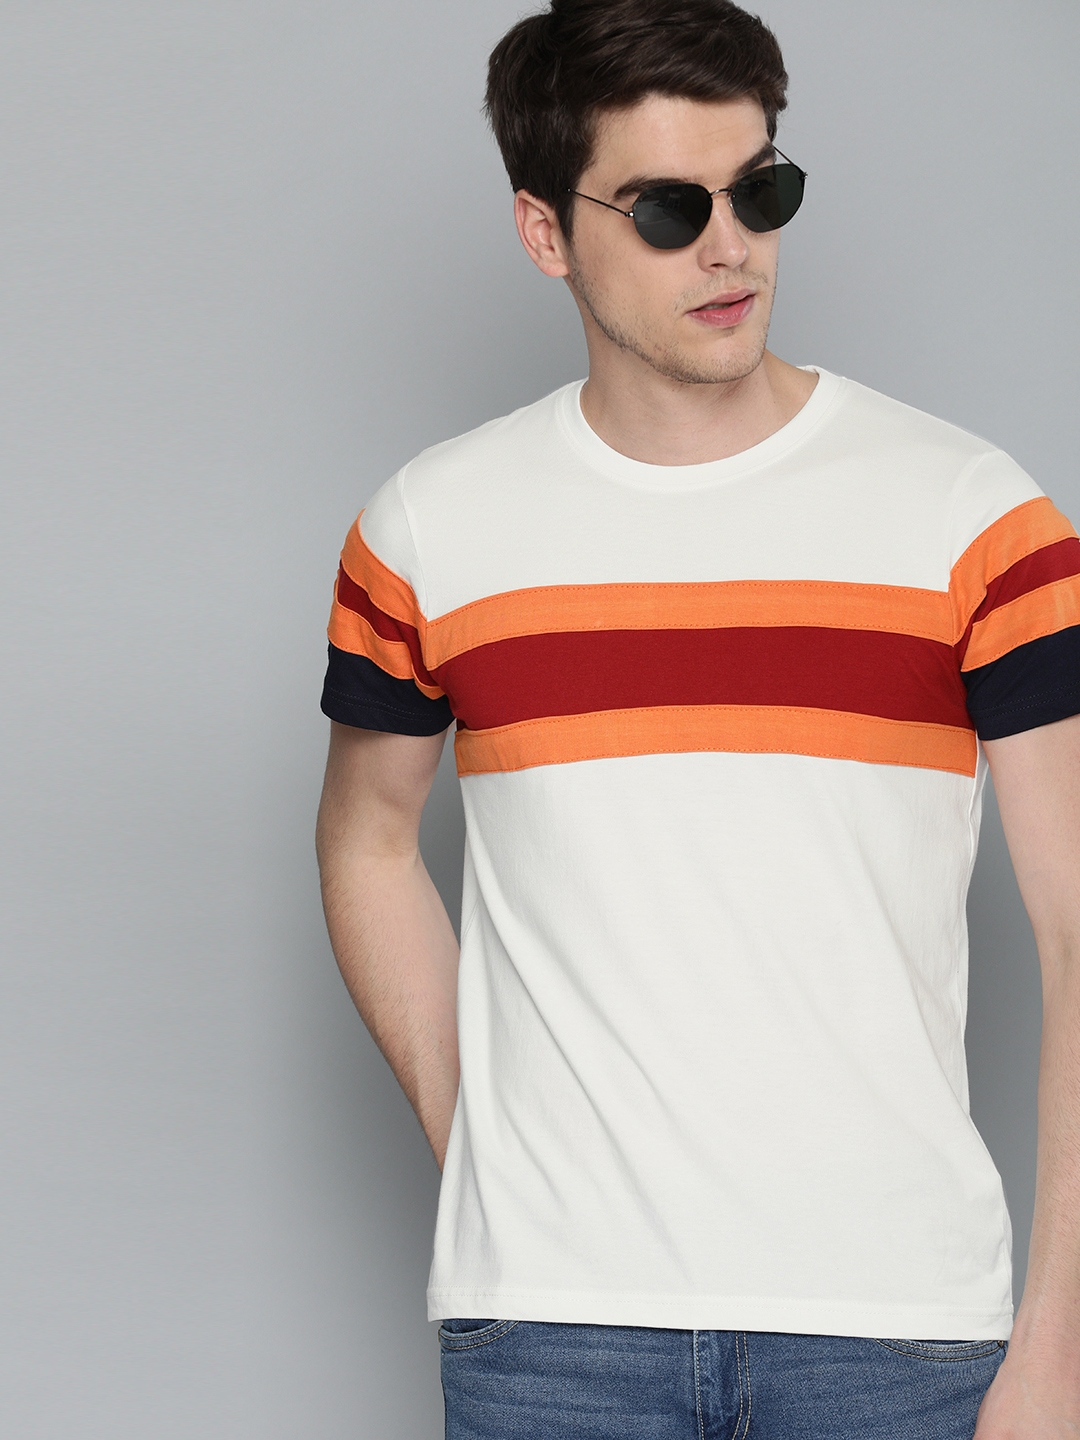 Buy HERENOW Men White Orange Striped Round Neck Pure Cotton T Shirt ...